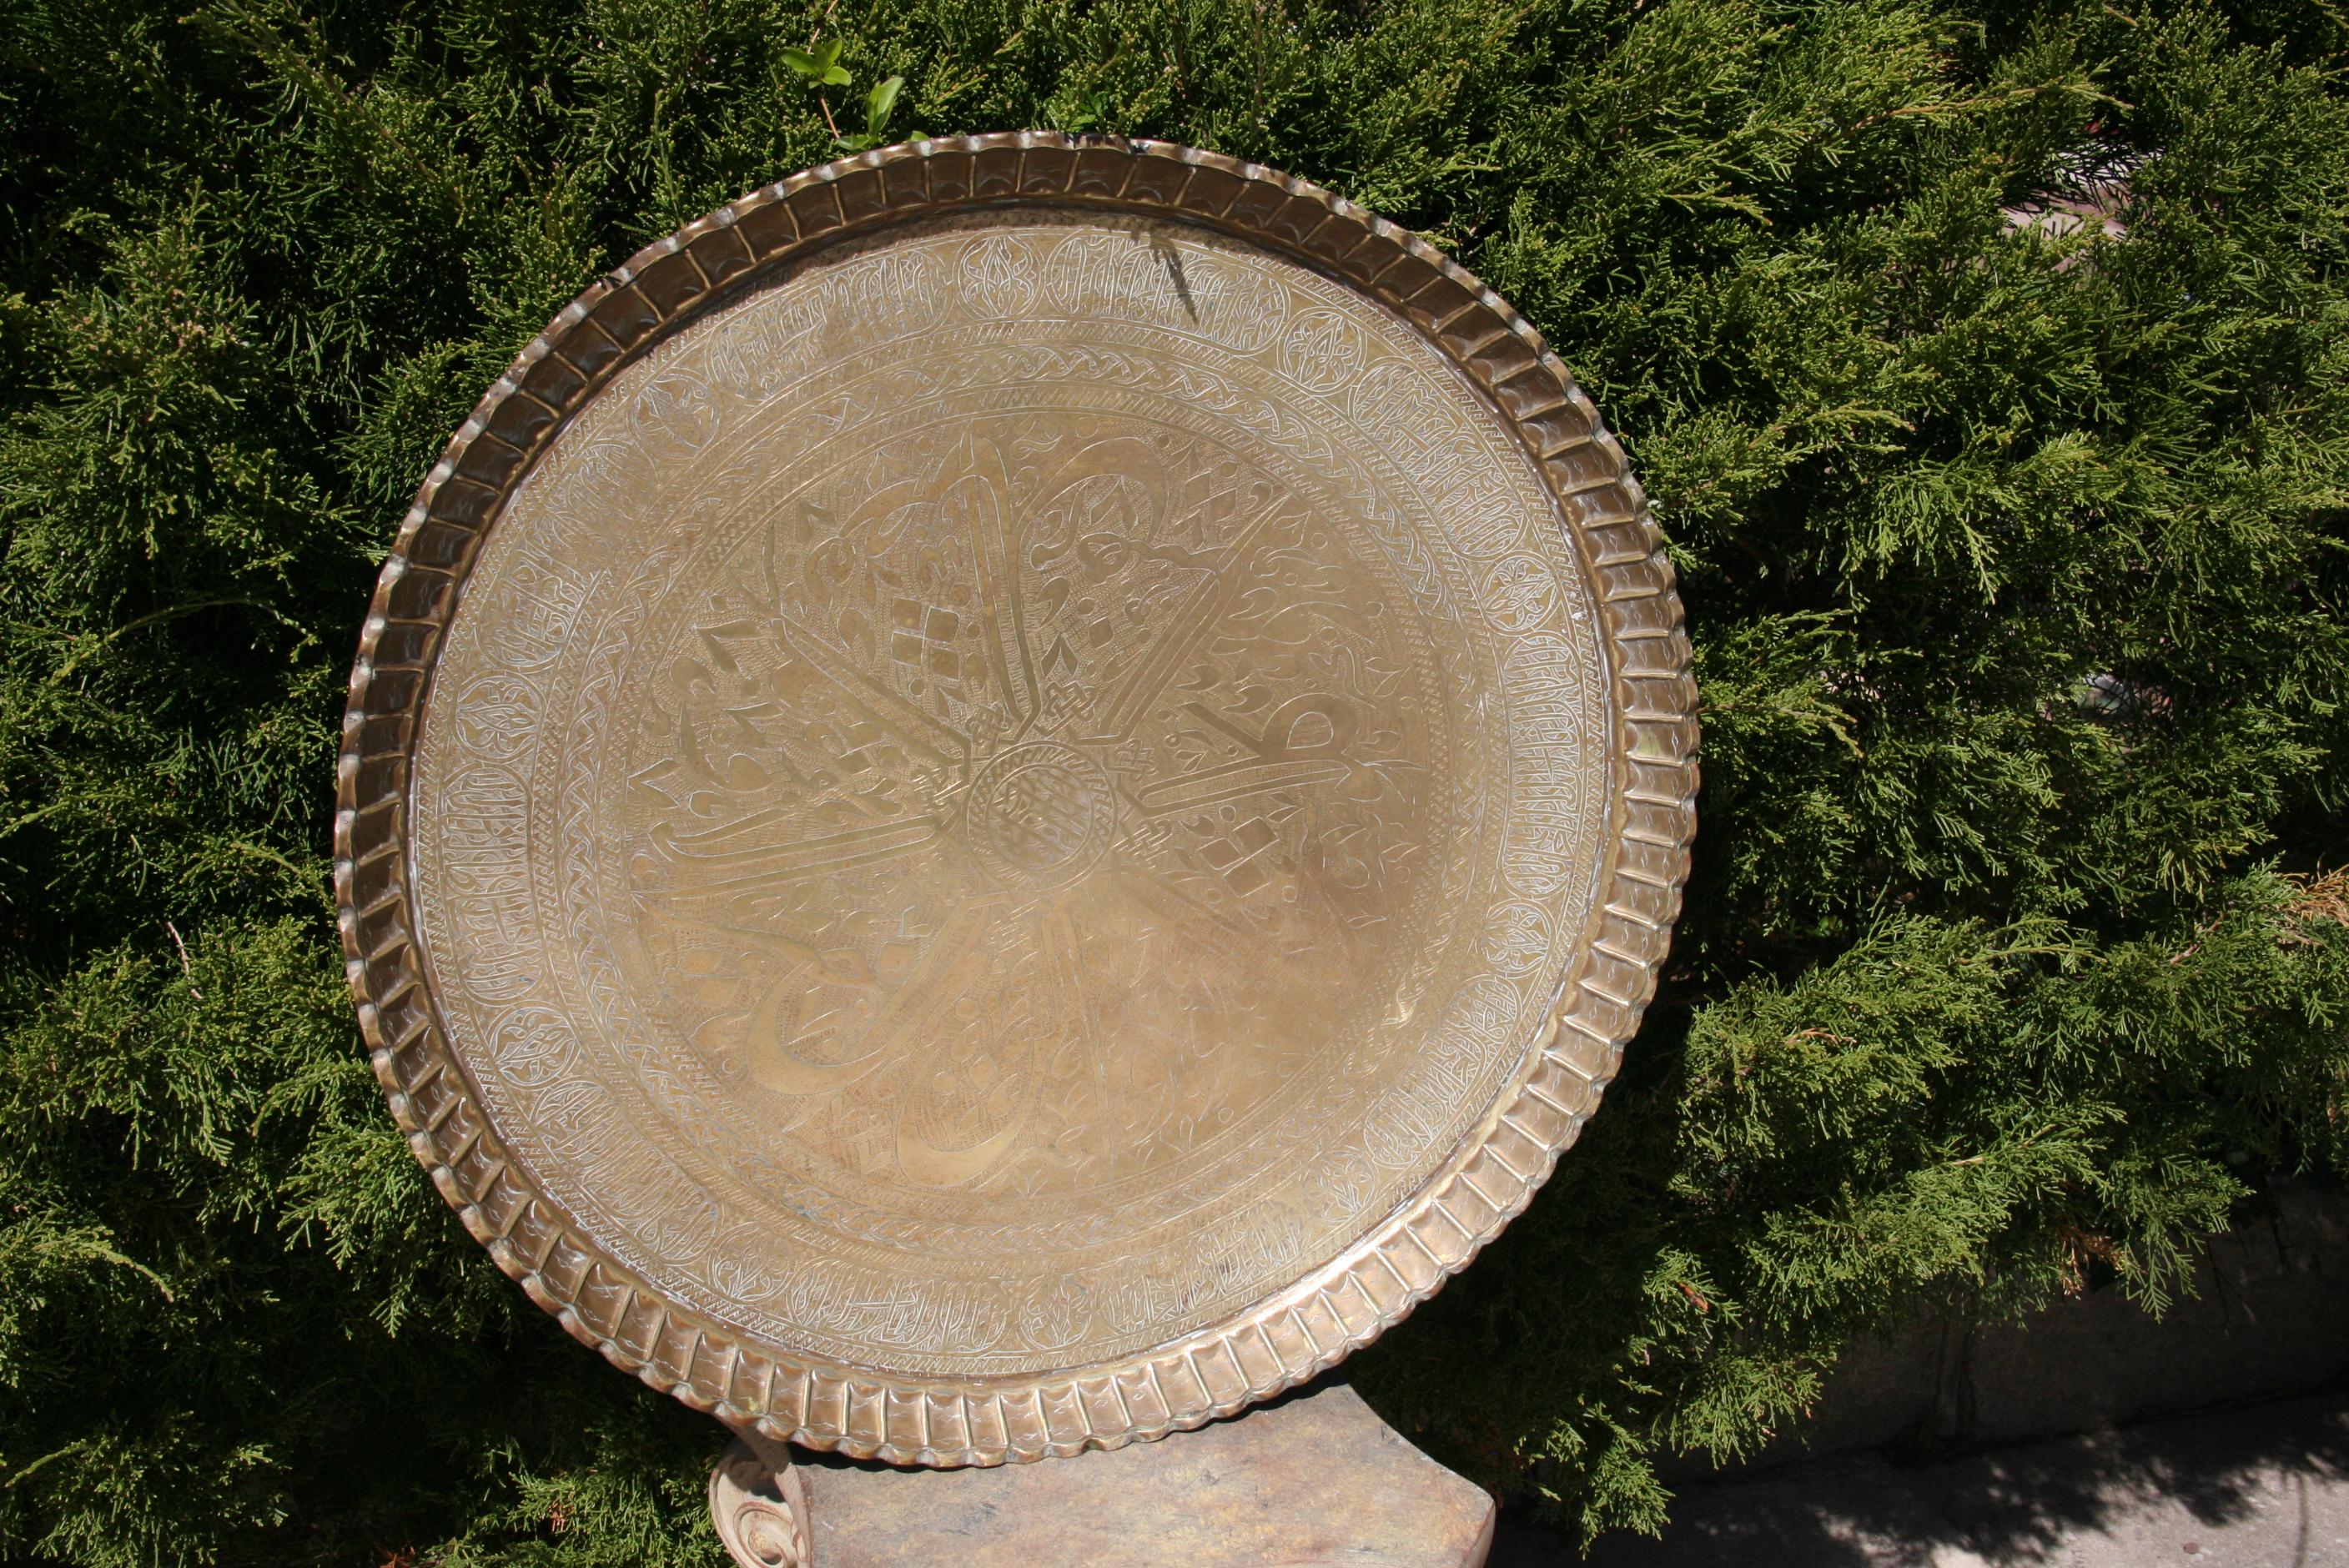 3-481 Large decorative Moorish hand made brass tray with elaborative and fine Islamic geometric designs with pie crest edge